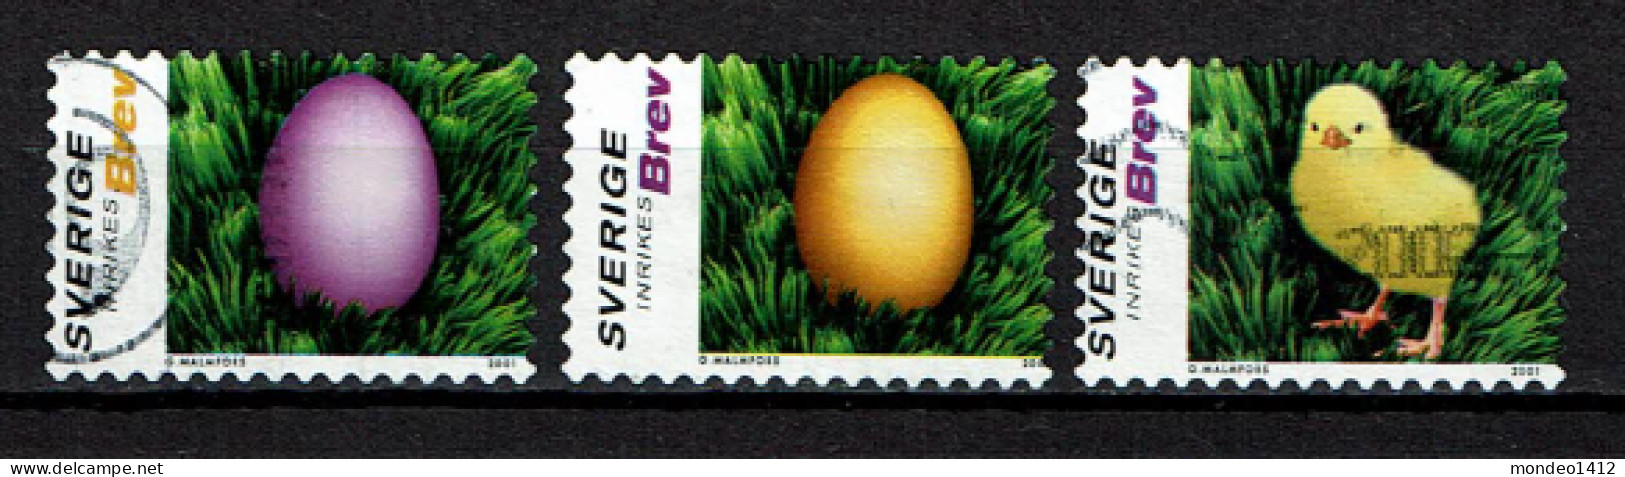 Sweden 2001 - Easter, Ostern, Pasen - Used - Gebraucht